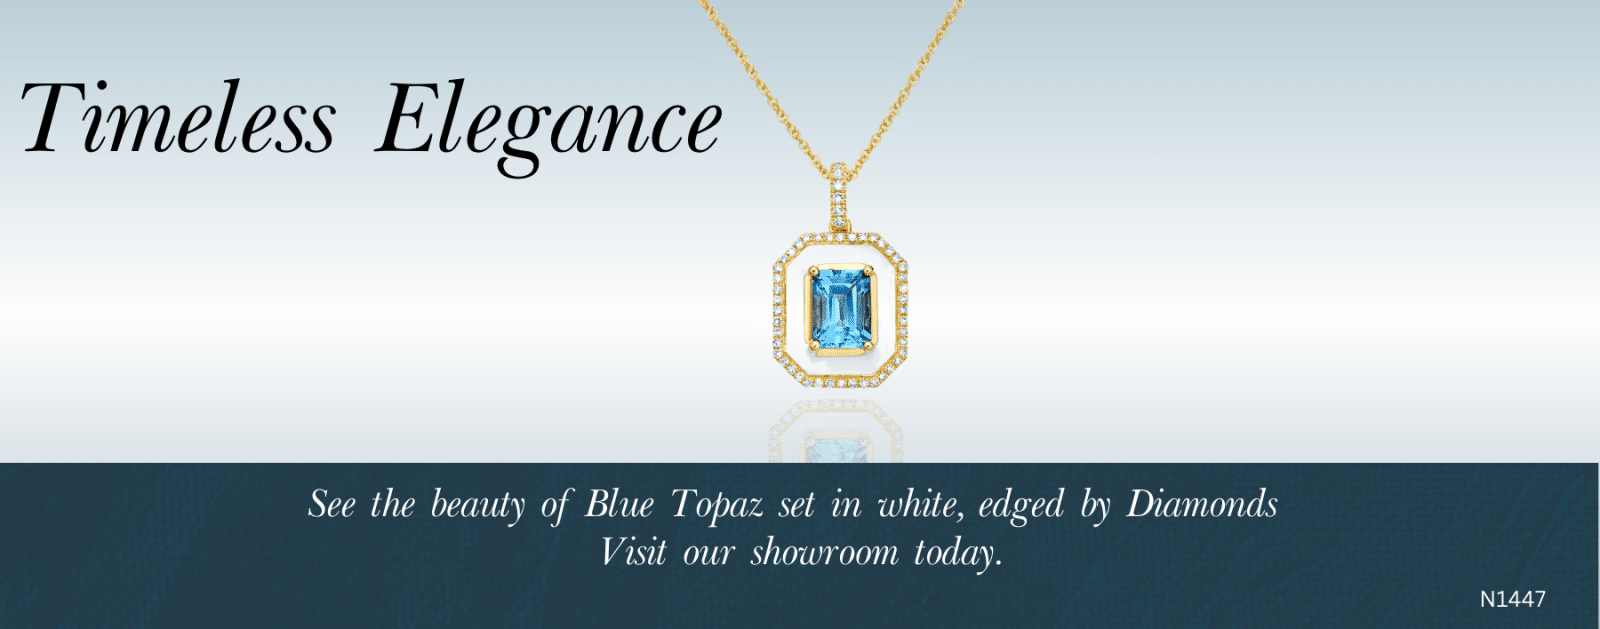 Stunning Blue Topaz and Diamond Necklace